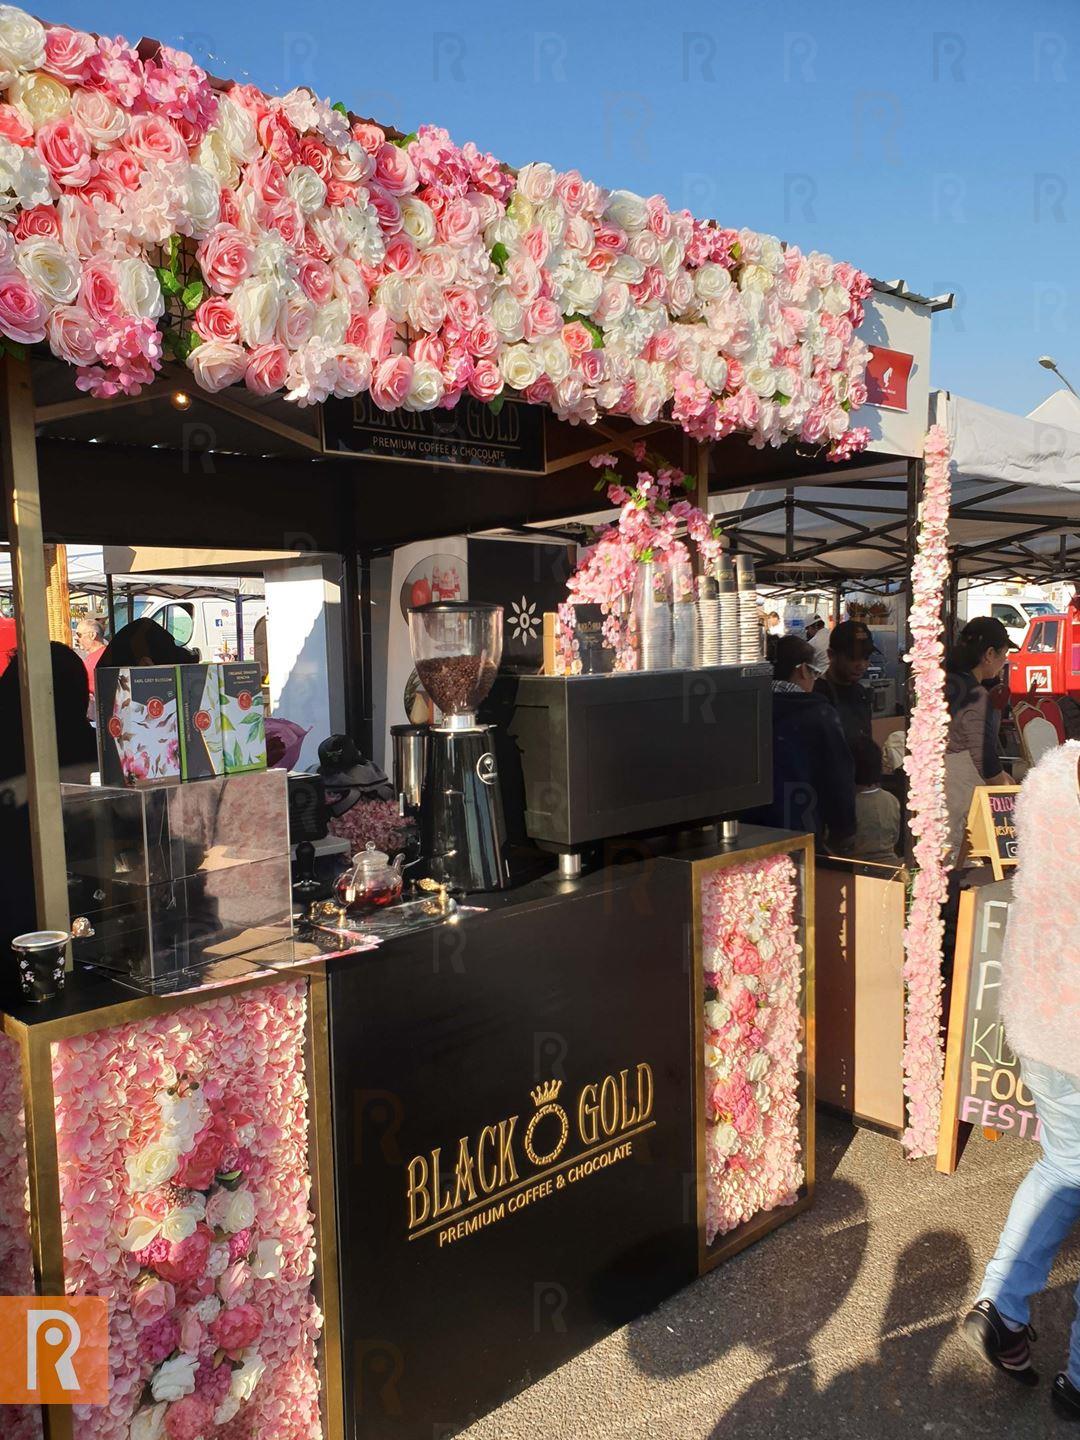 Kuwait Street Food Festival 2019 at Kuwait International Fairground